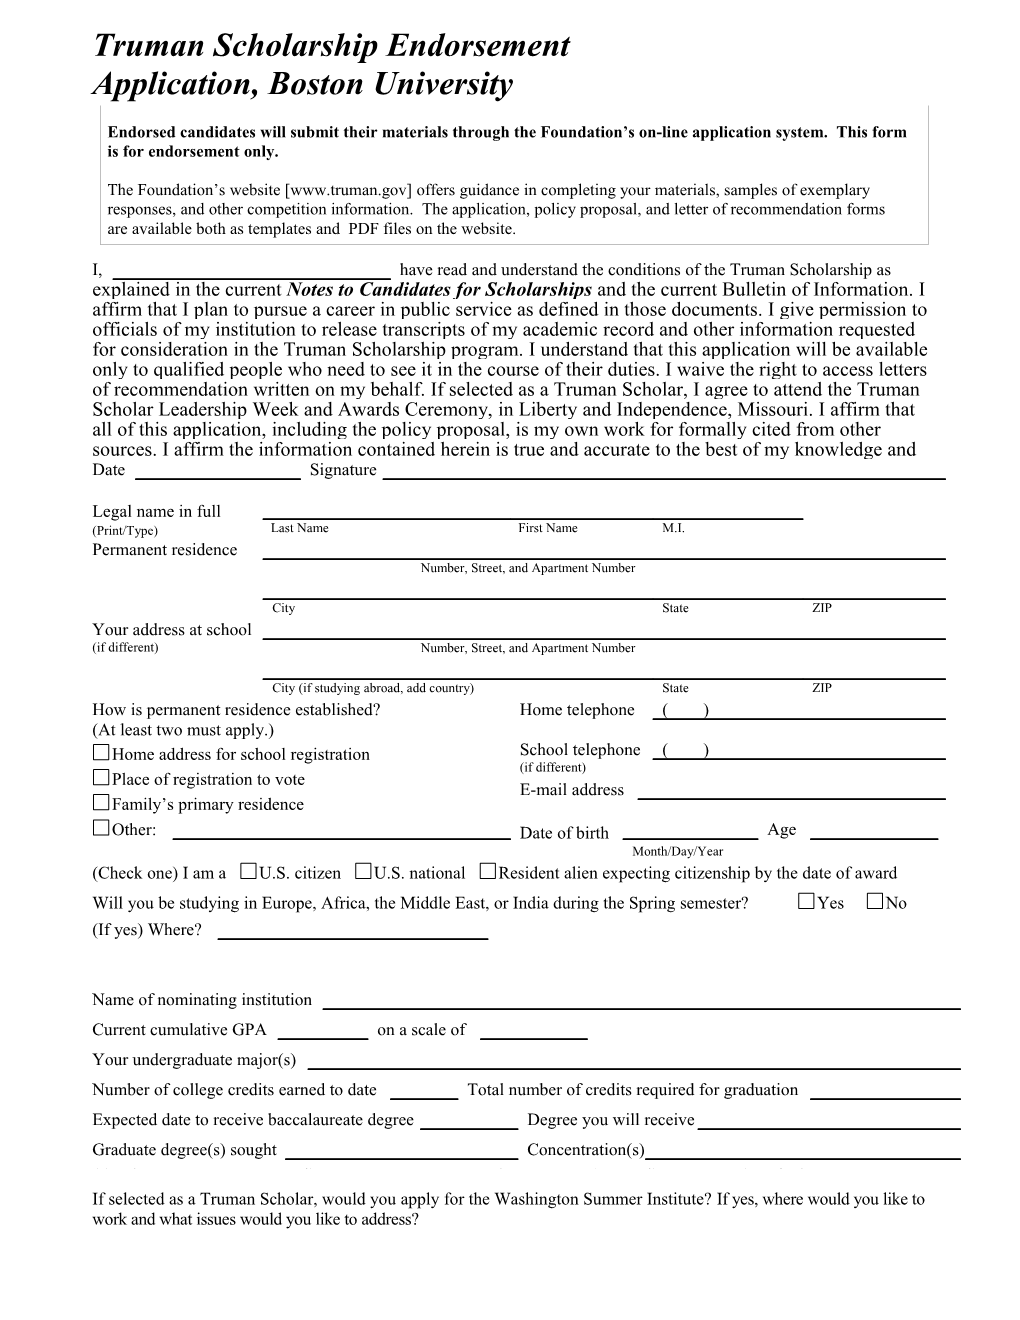 Truman Scholarship Endorsement Application, Boston University